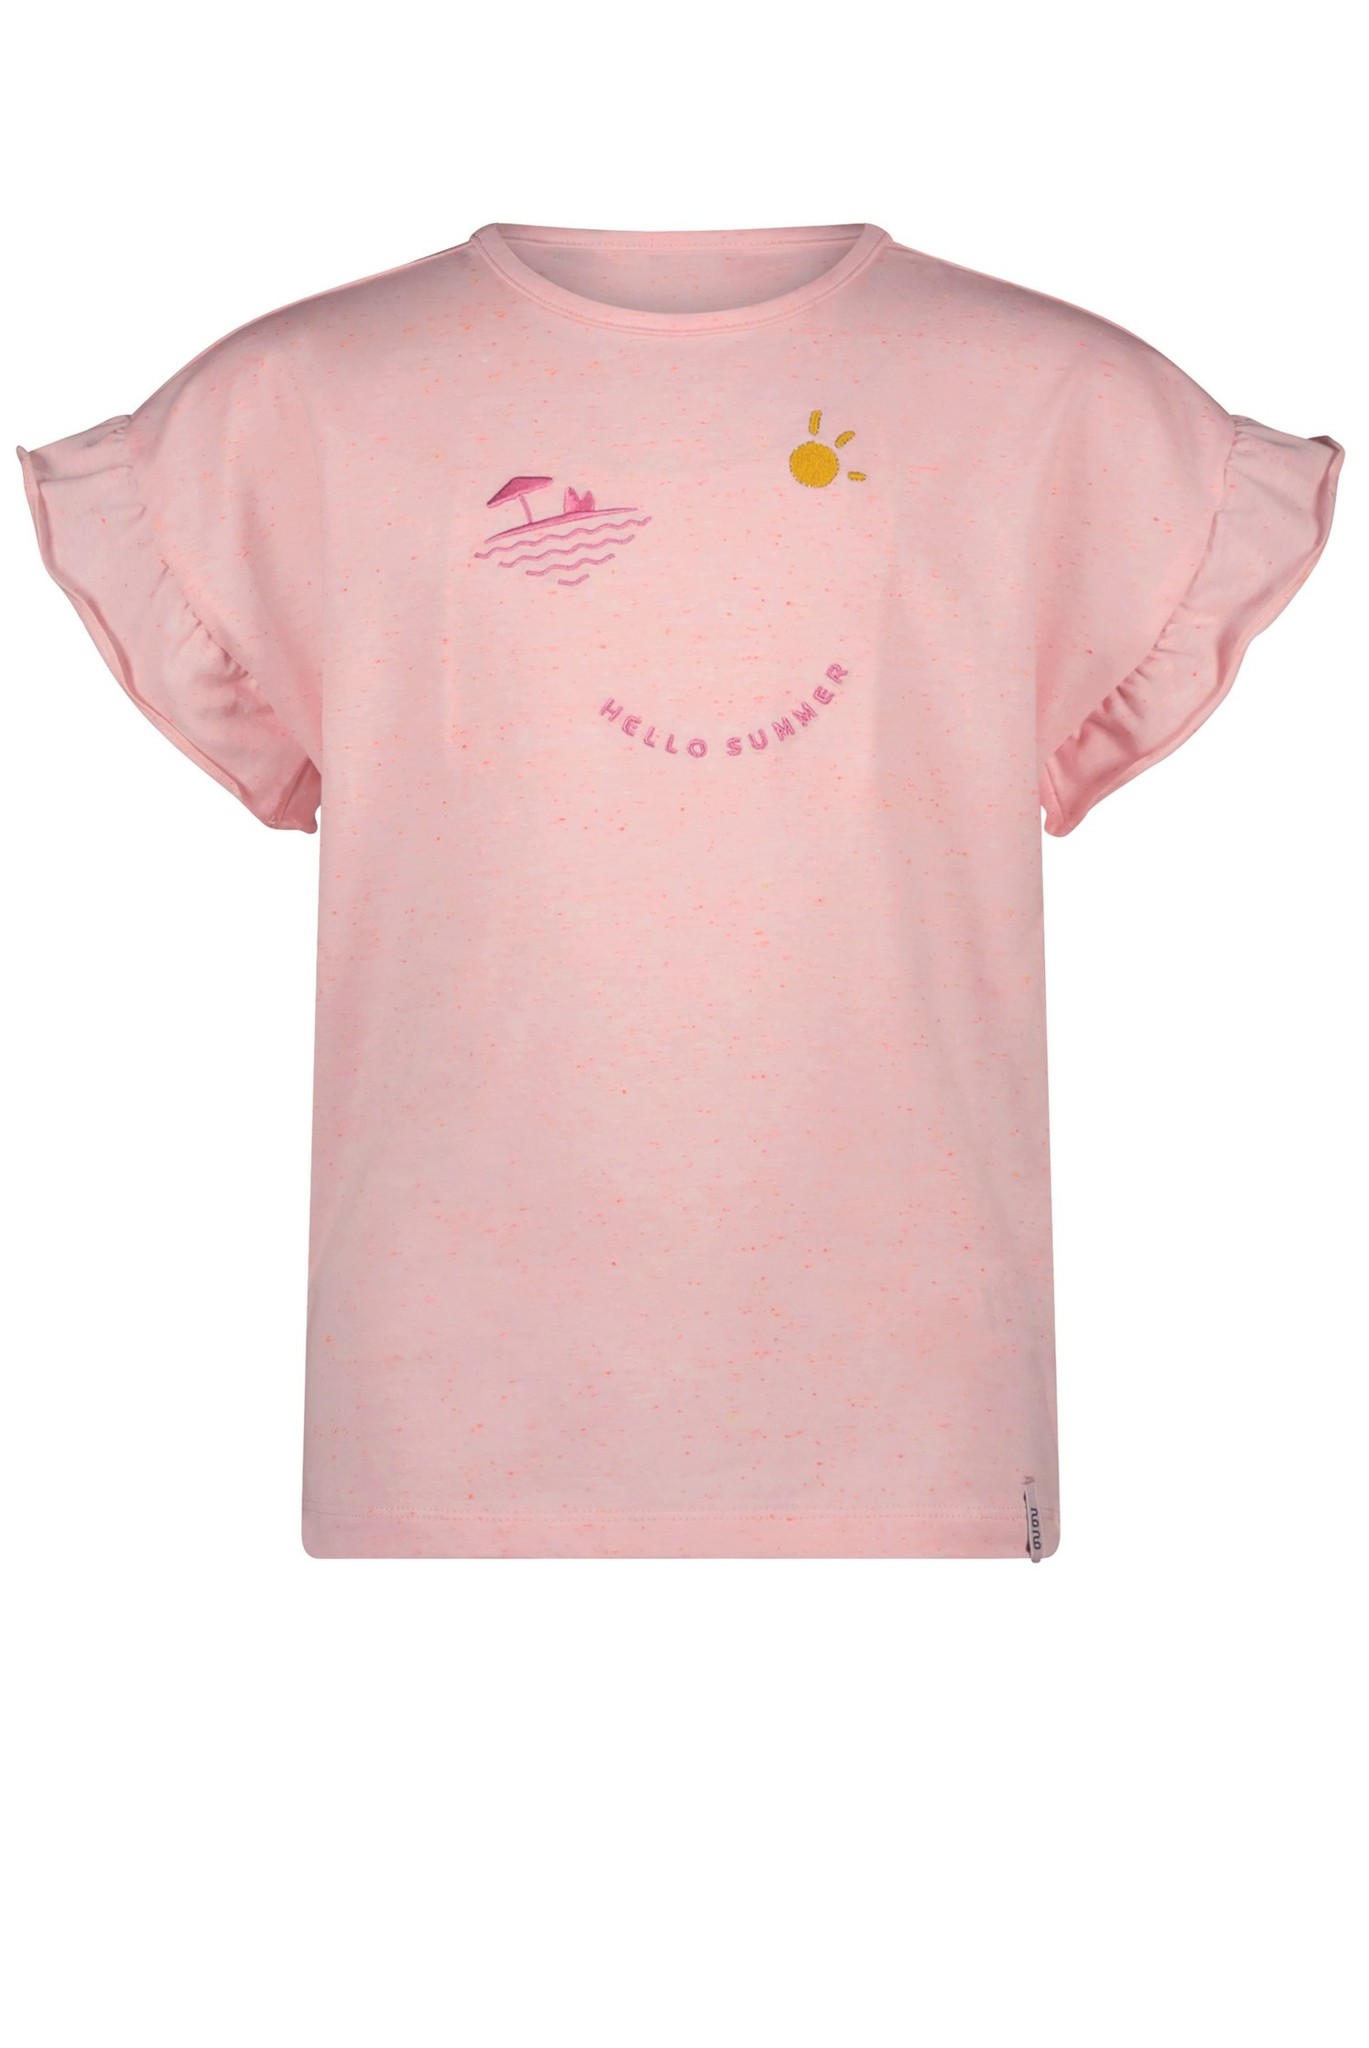 NONO - T-Shirt - Cherry Blossom - Maat 122-128